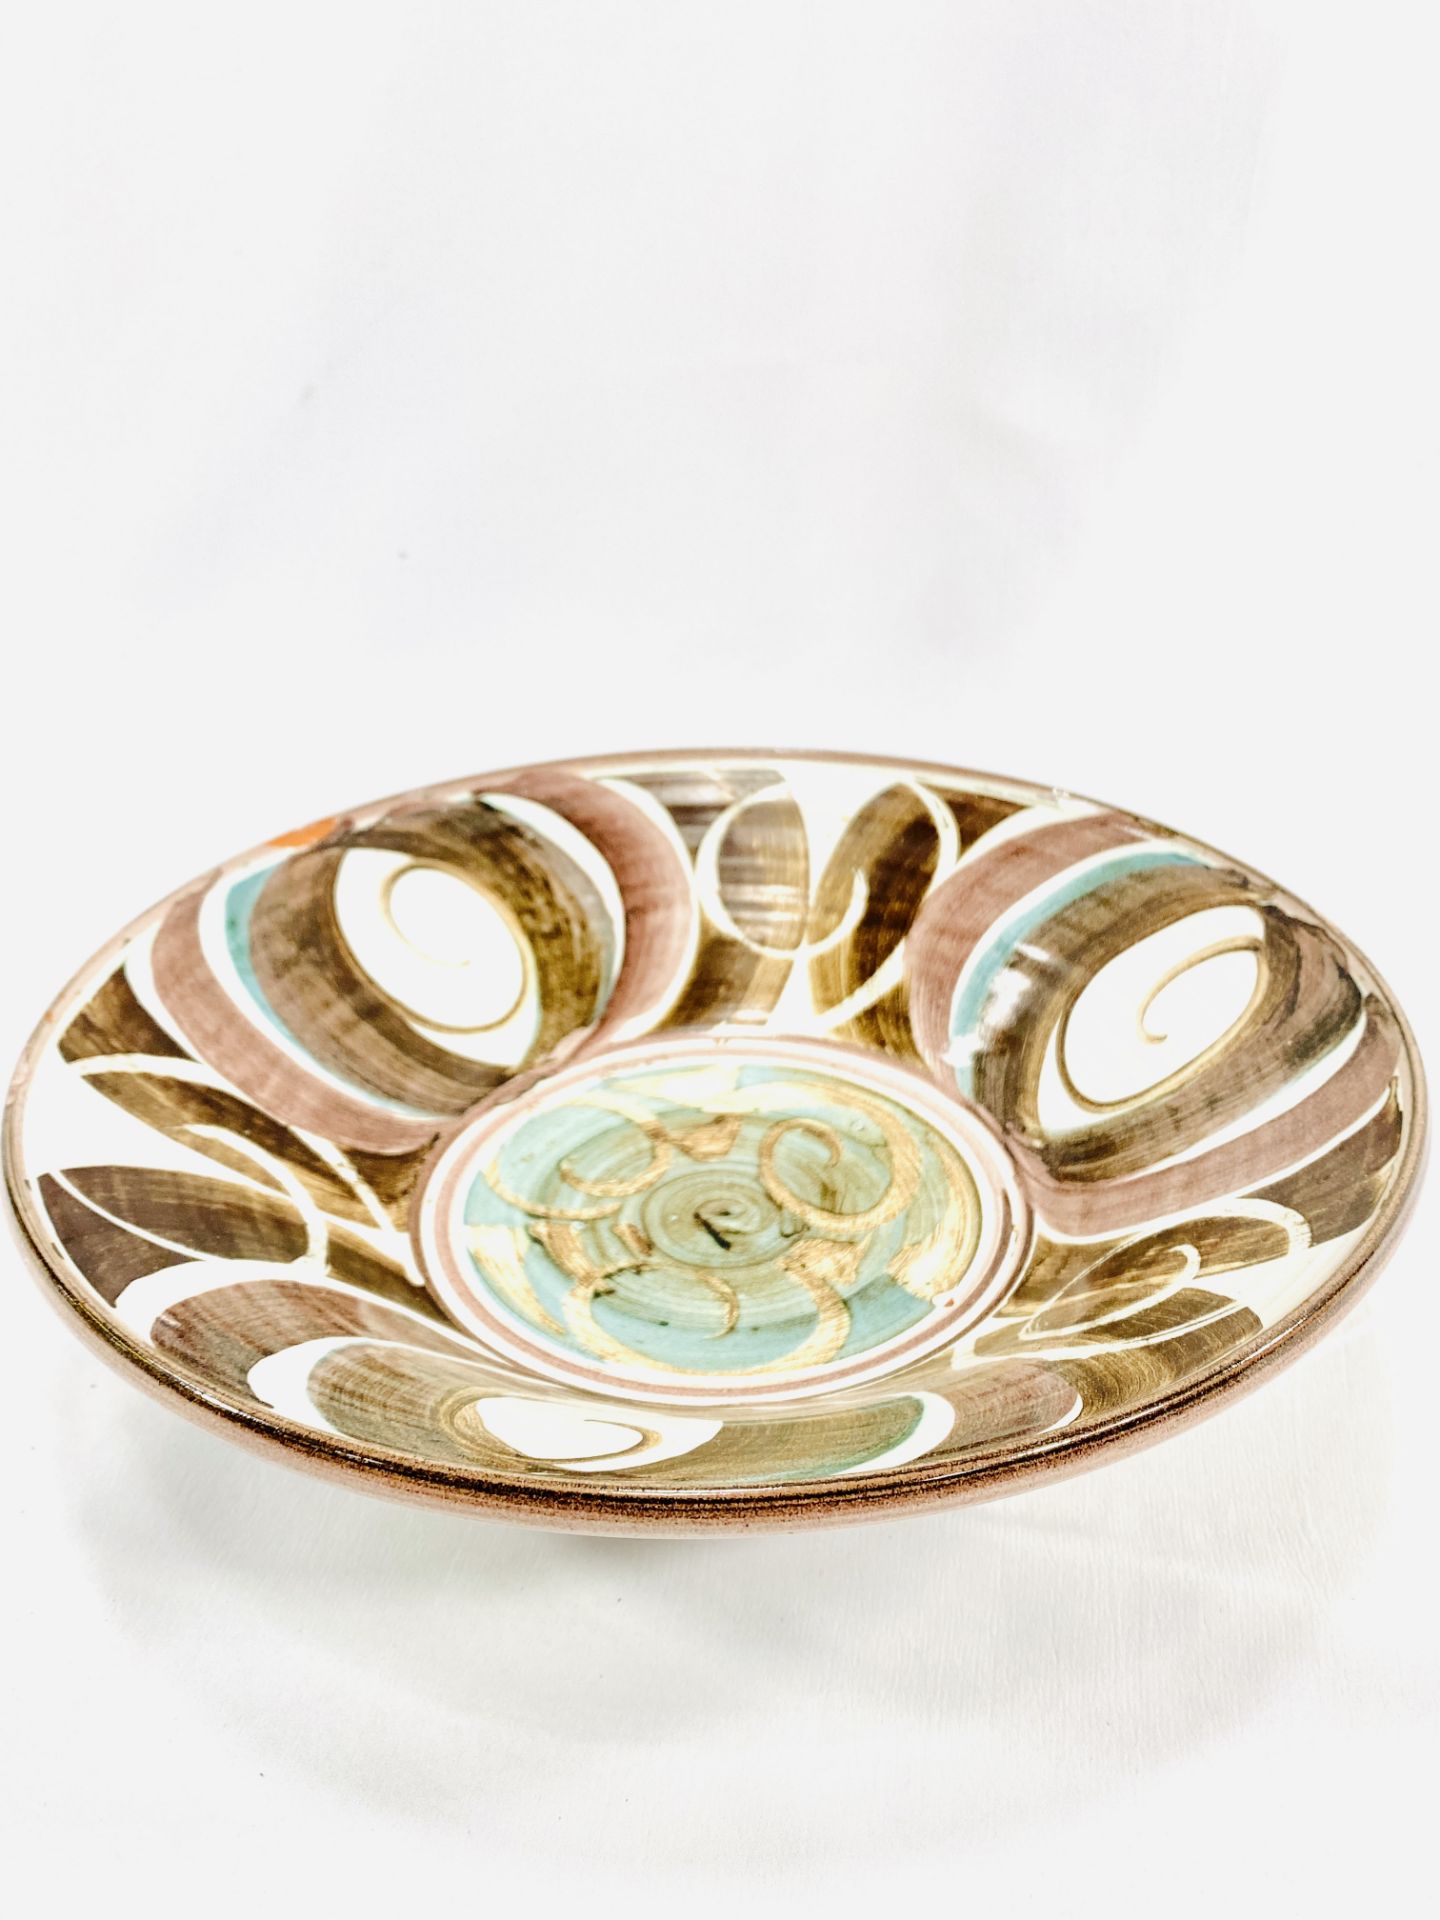 Aldermaston Pottery bowl